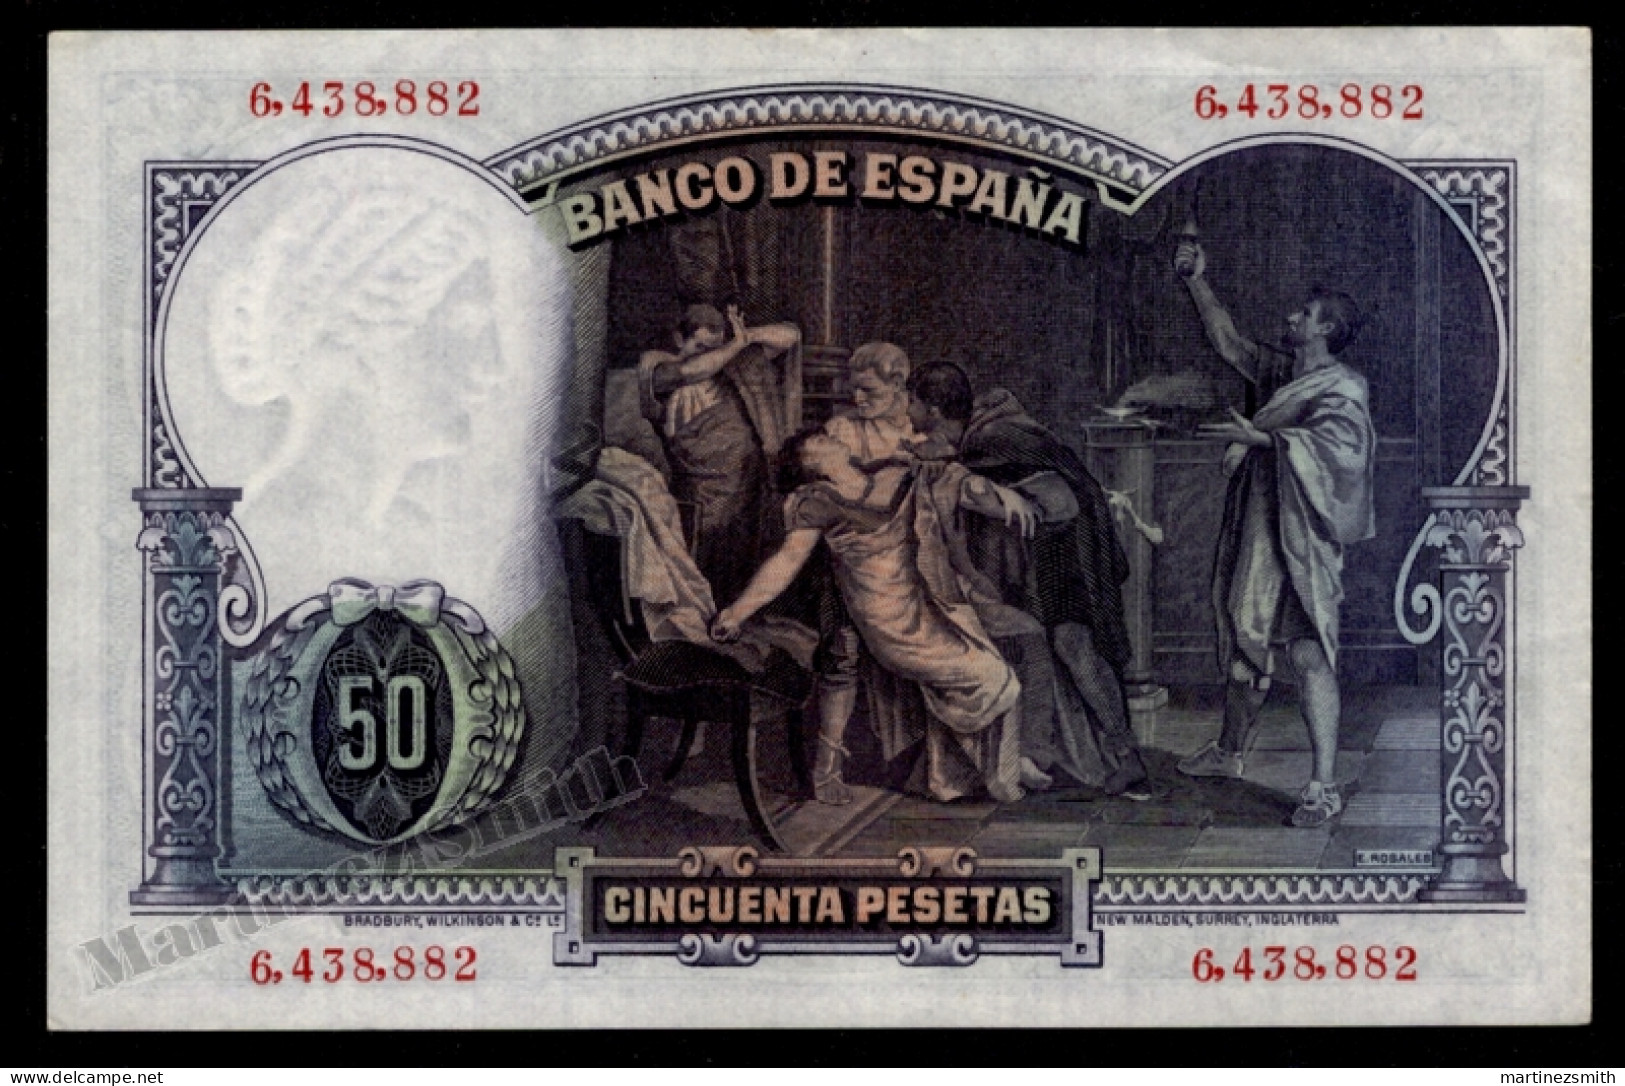 Spain II Republic Banknote Year 1931 Eduardo Rosales Value 25 Pesetas Pick 82 - Condition AU - 50 Pesetas